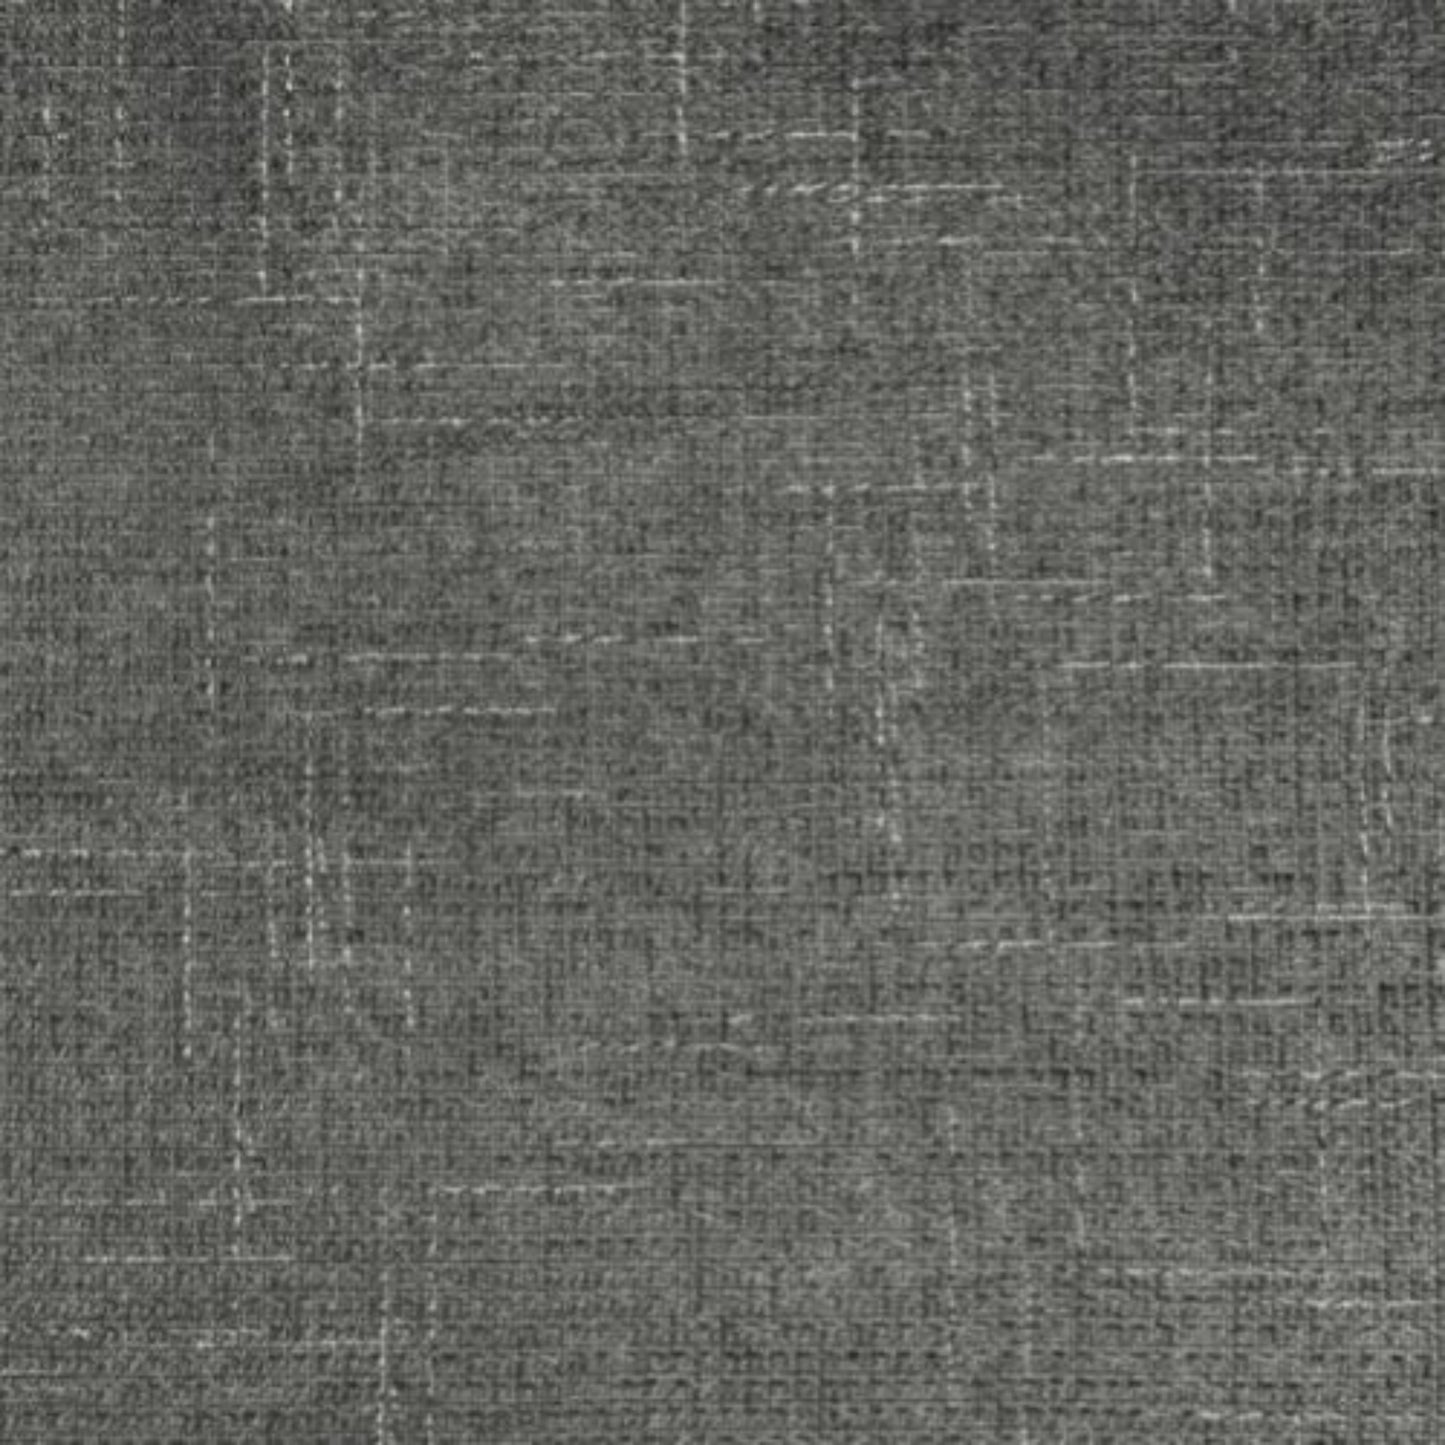 Castle fabric sofa grey